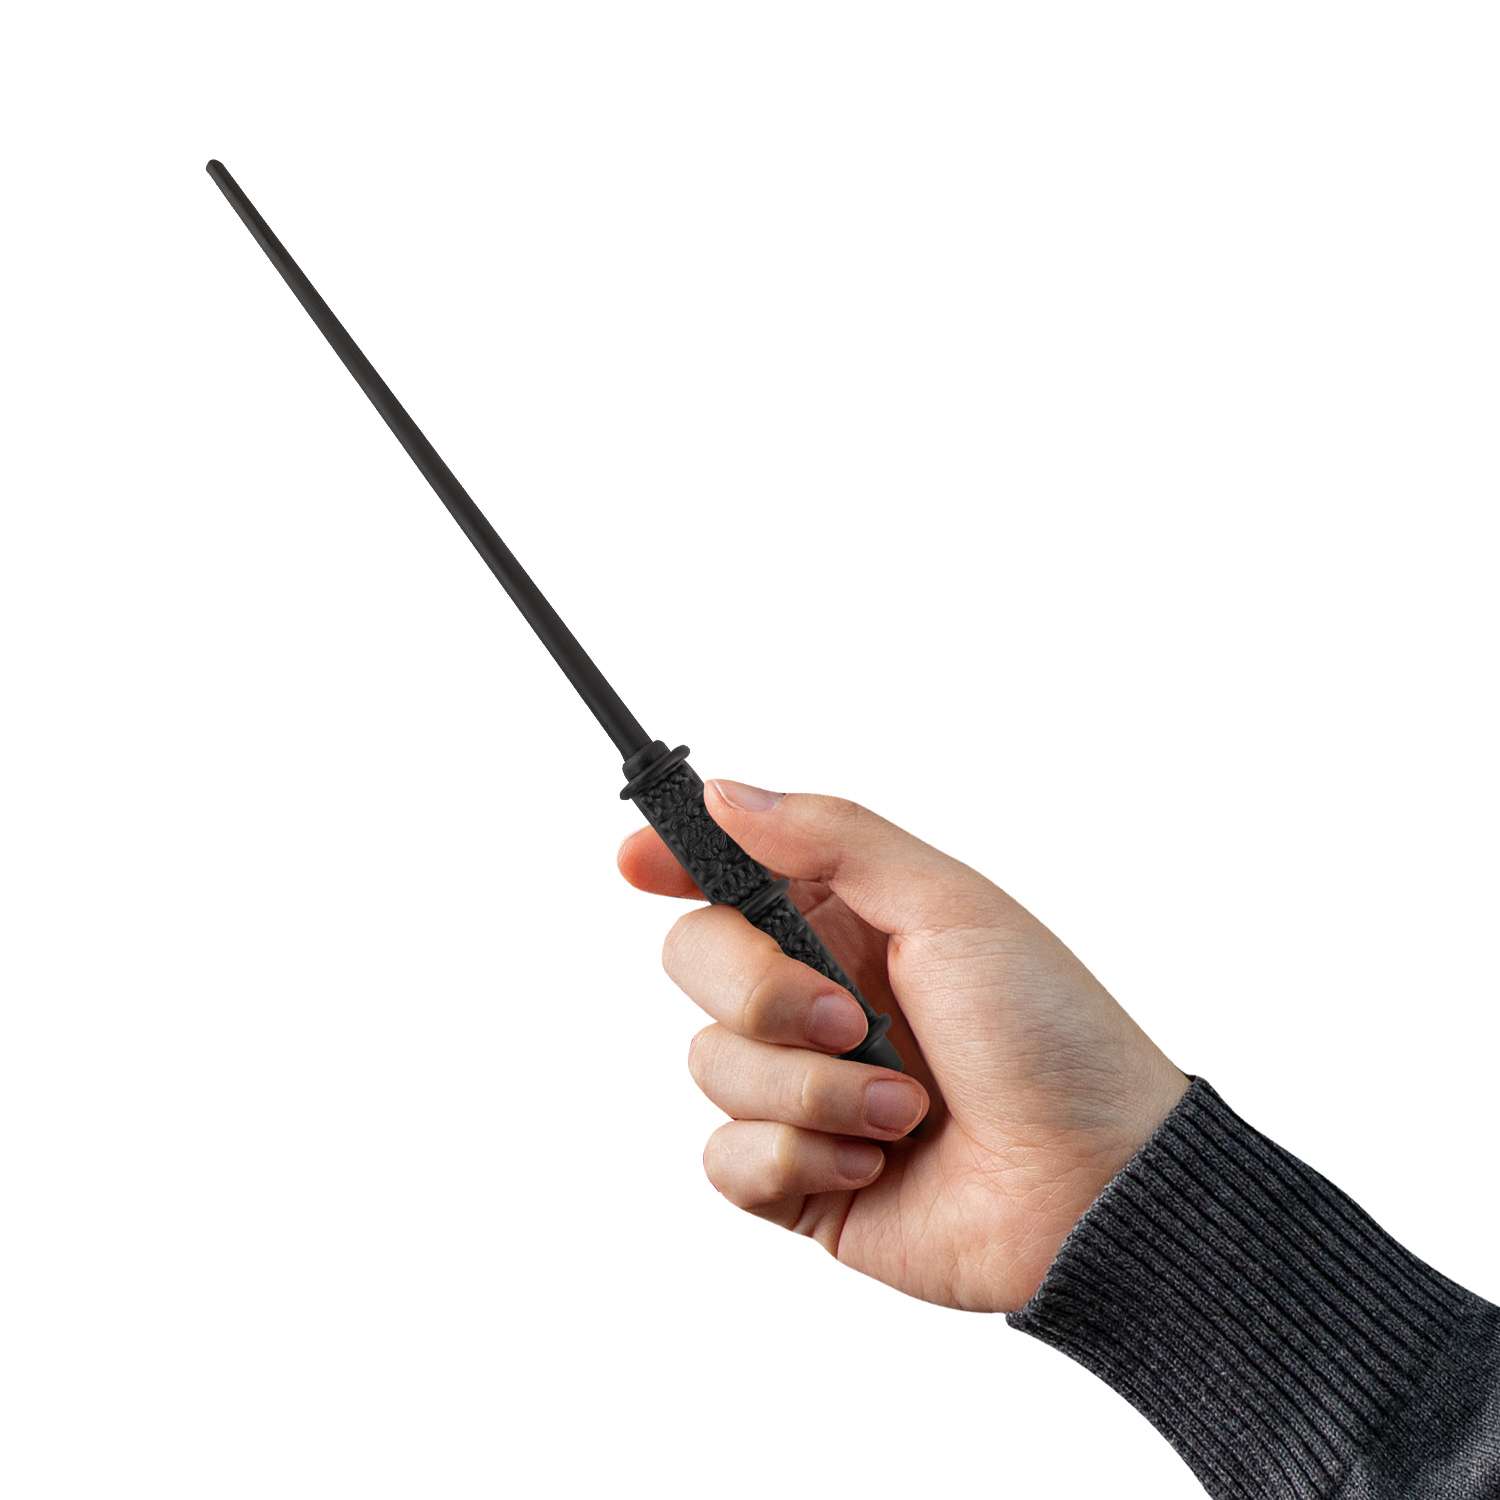 Ручка Harry Potter в виде палочки Северуса Снейпа 25 см с подставкой и закладкой - фото 5